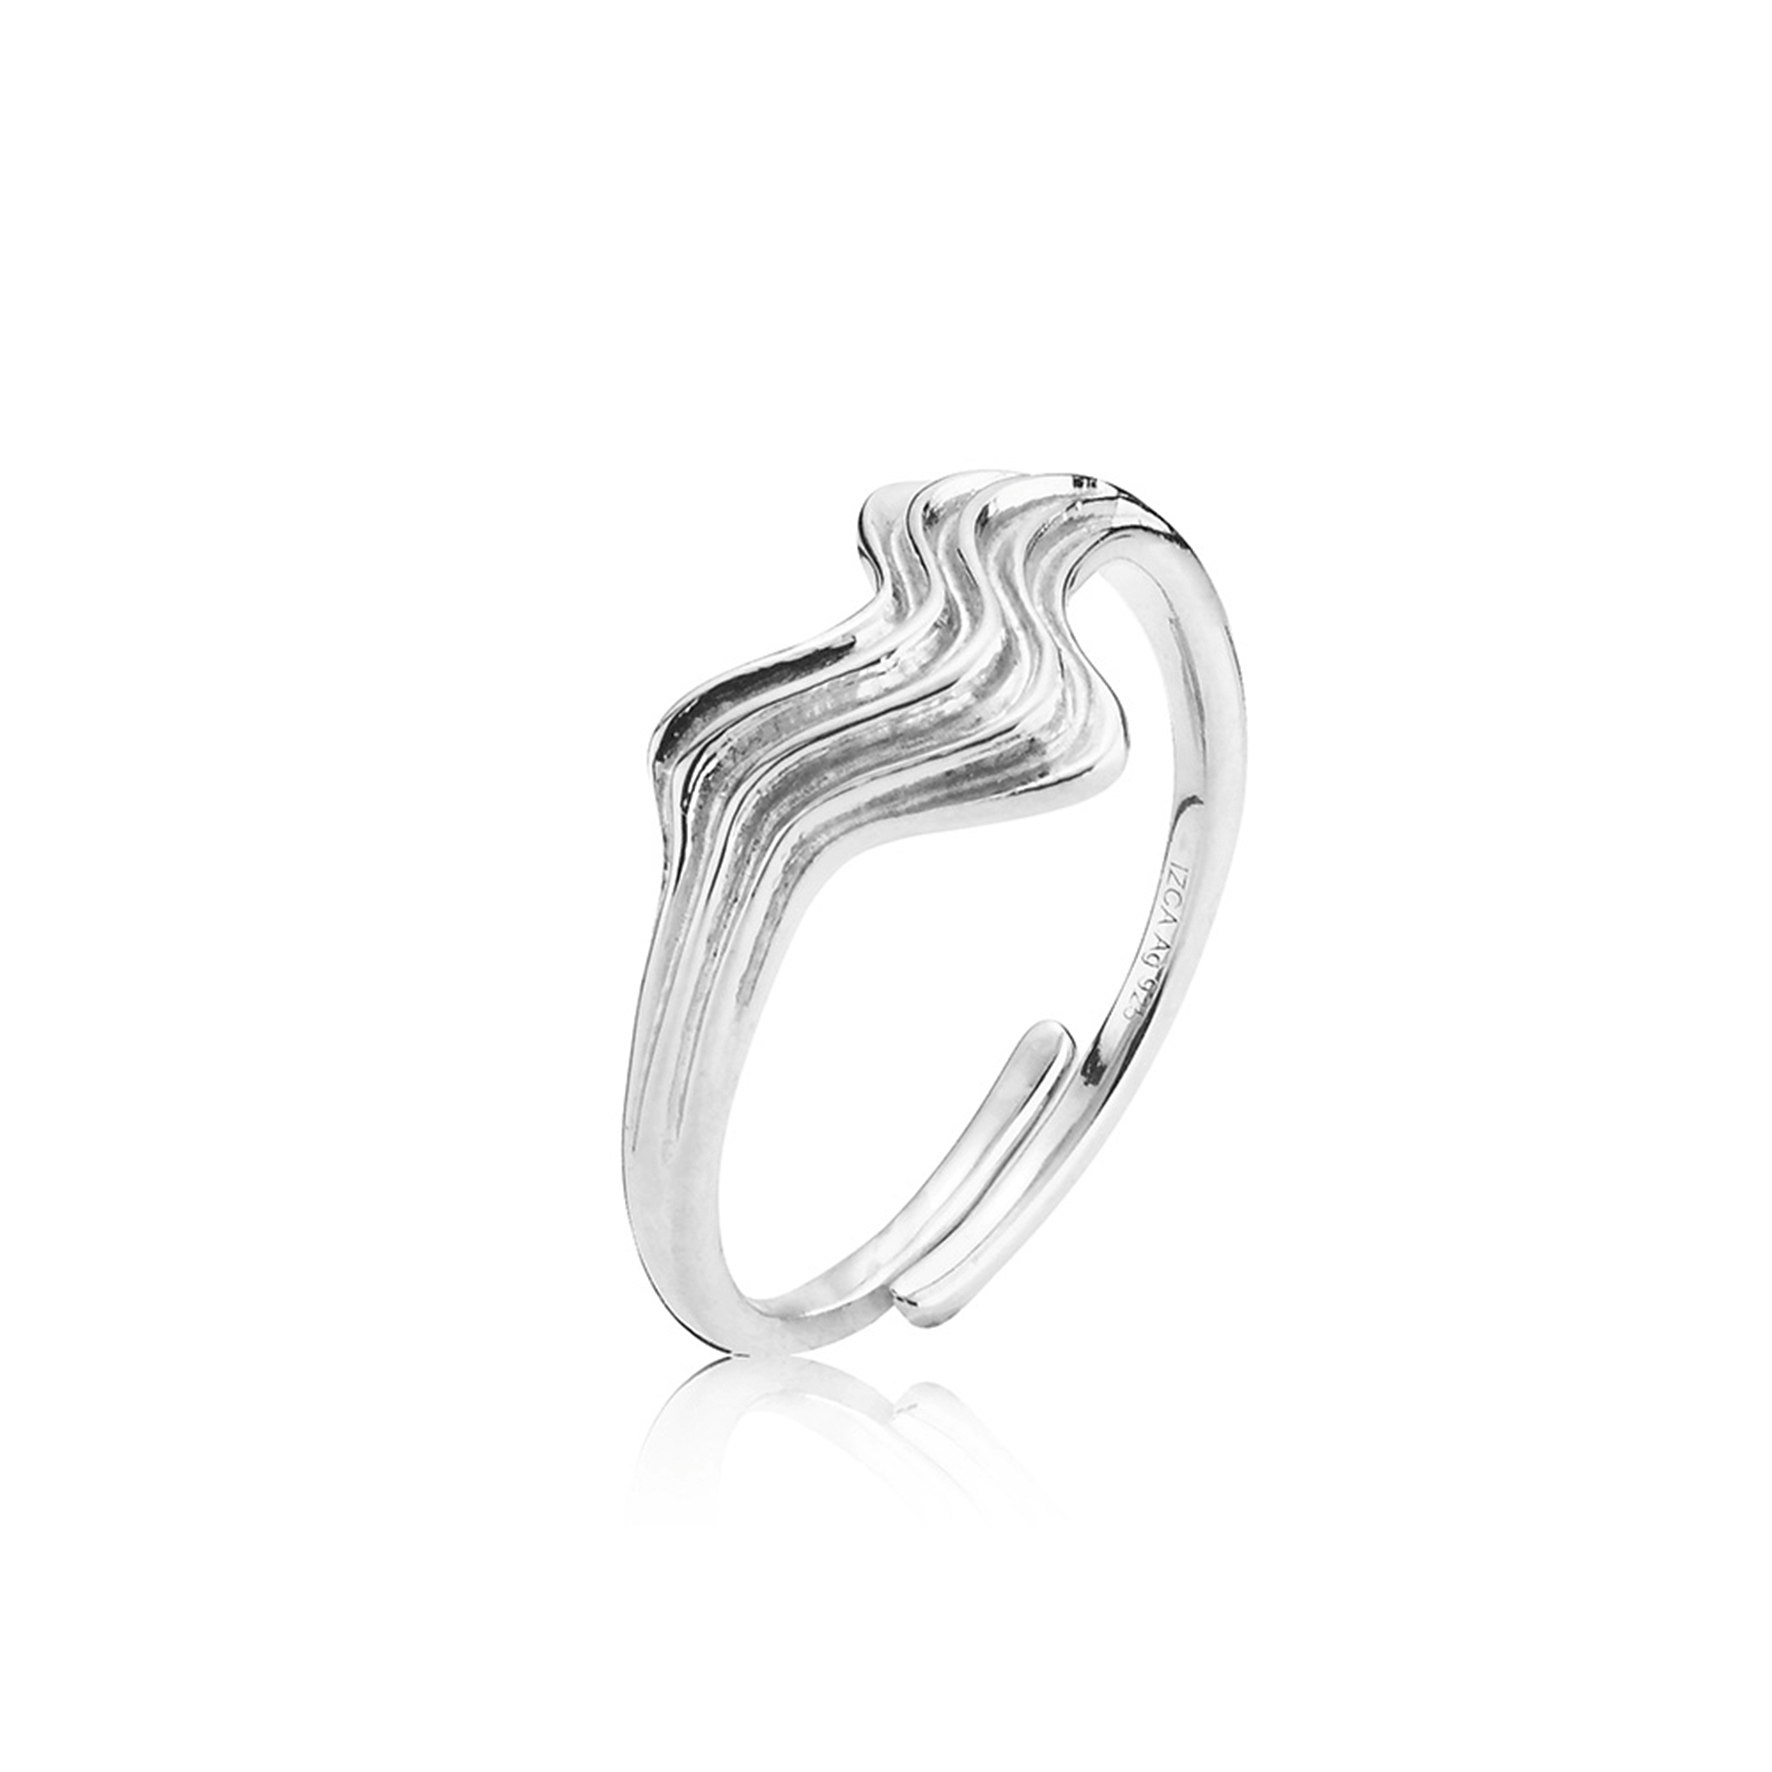 Silke x Sistie Waves Ring from Sistie in Silver Sterling 925